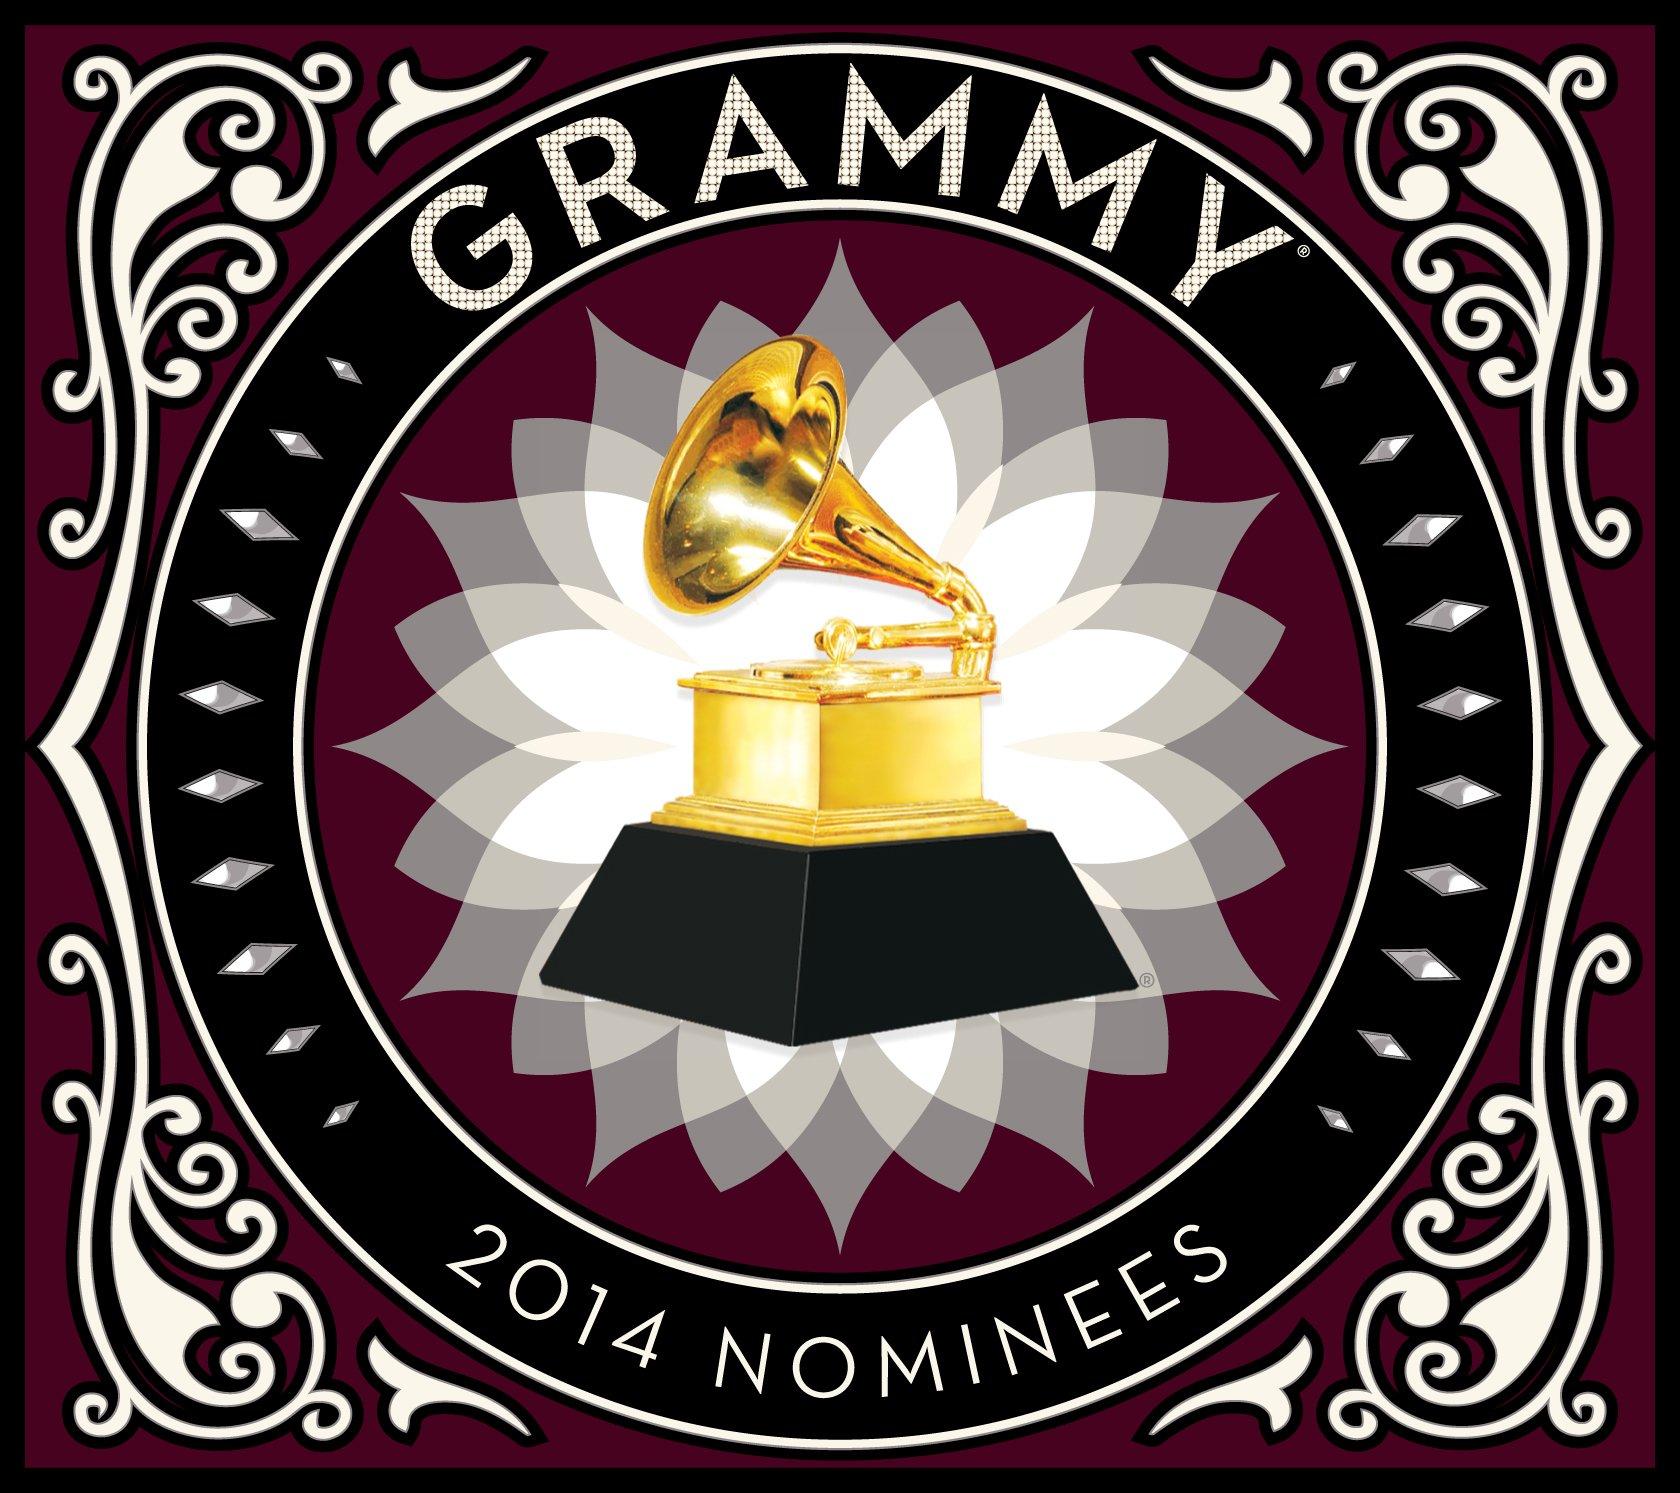 '2014 GRAMMY Nominees' album